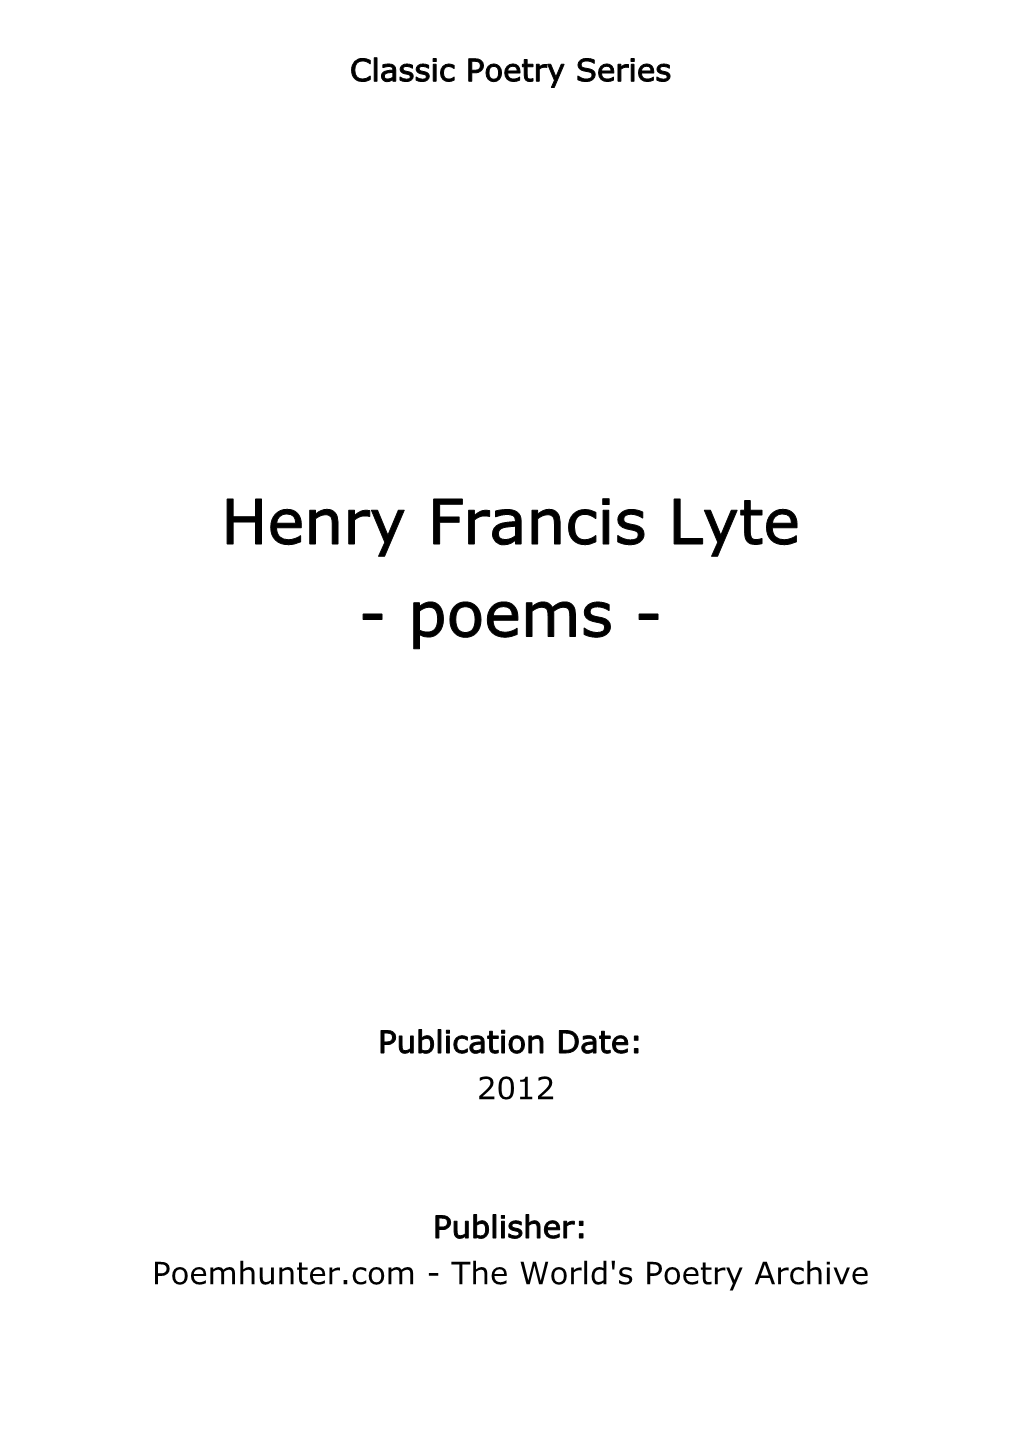 Henry Francis Lyte - Poems